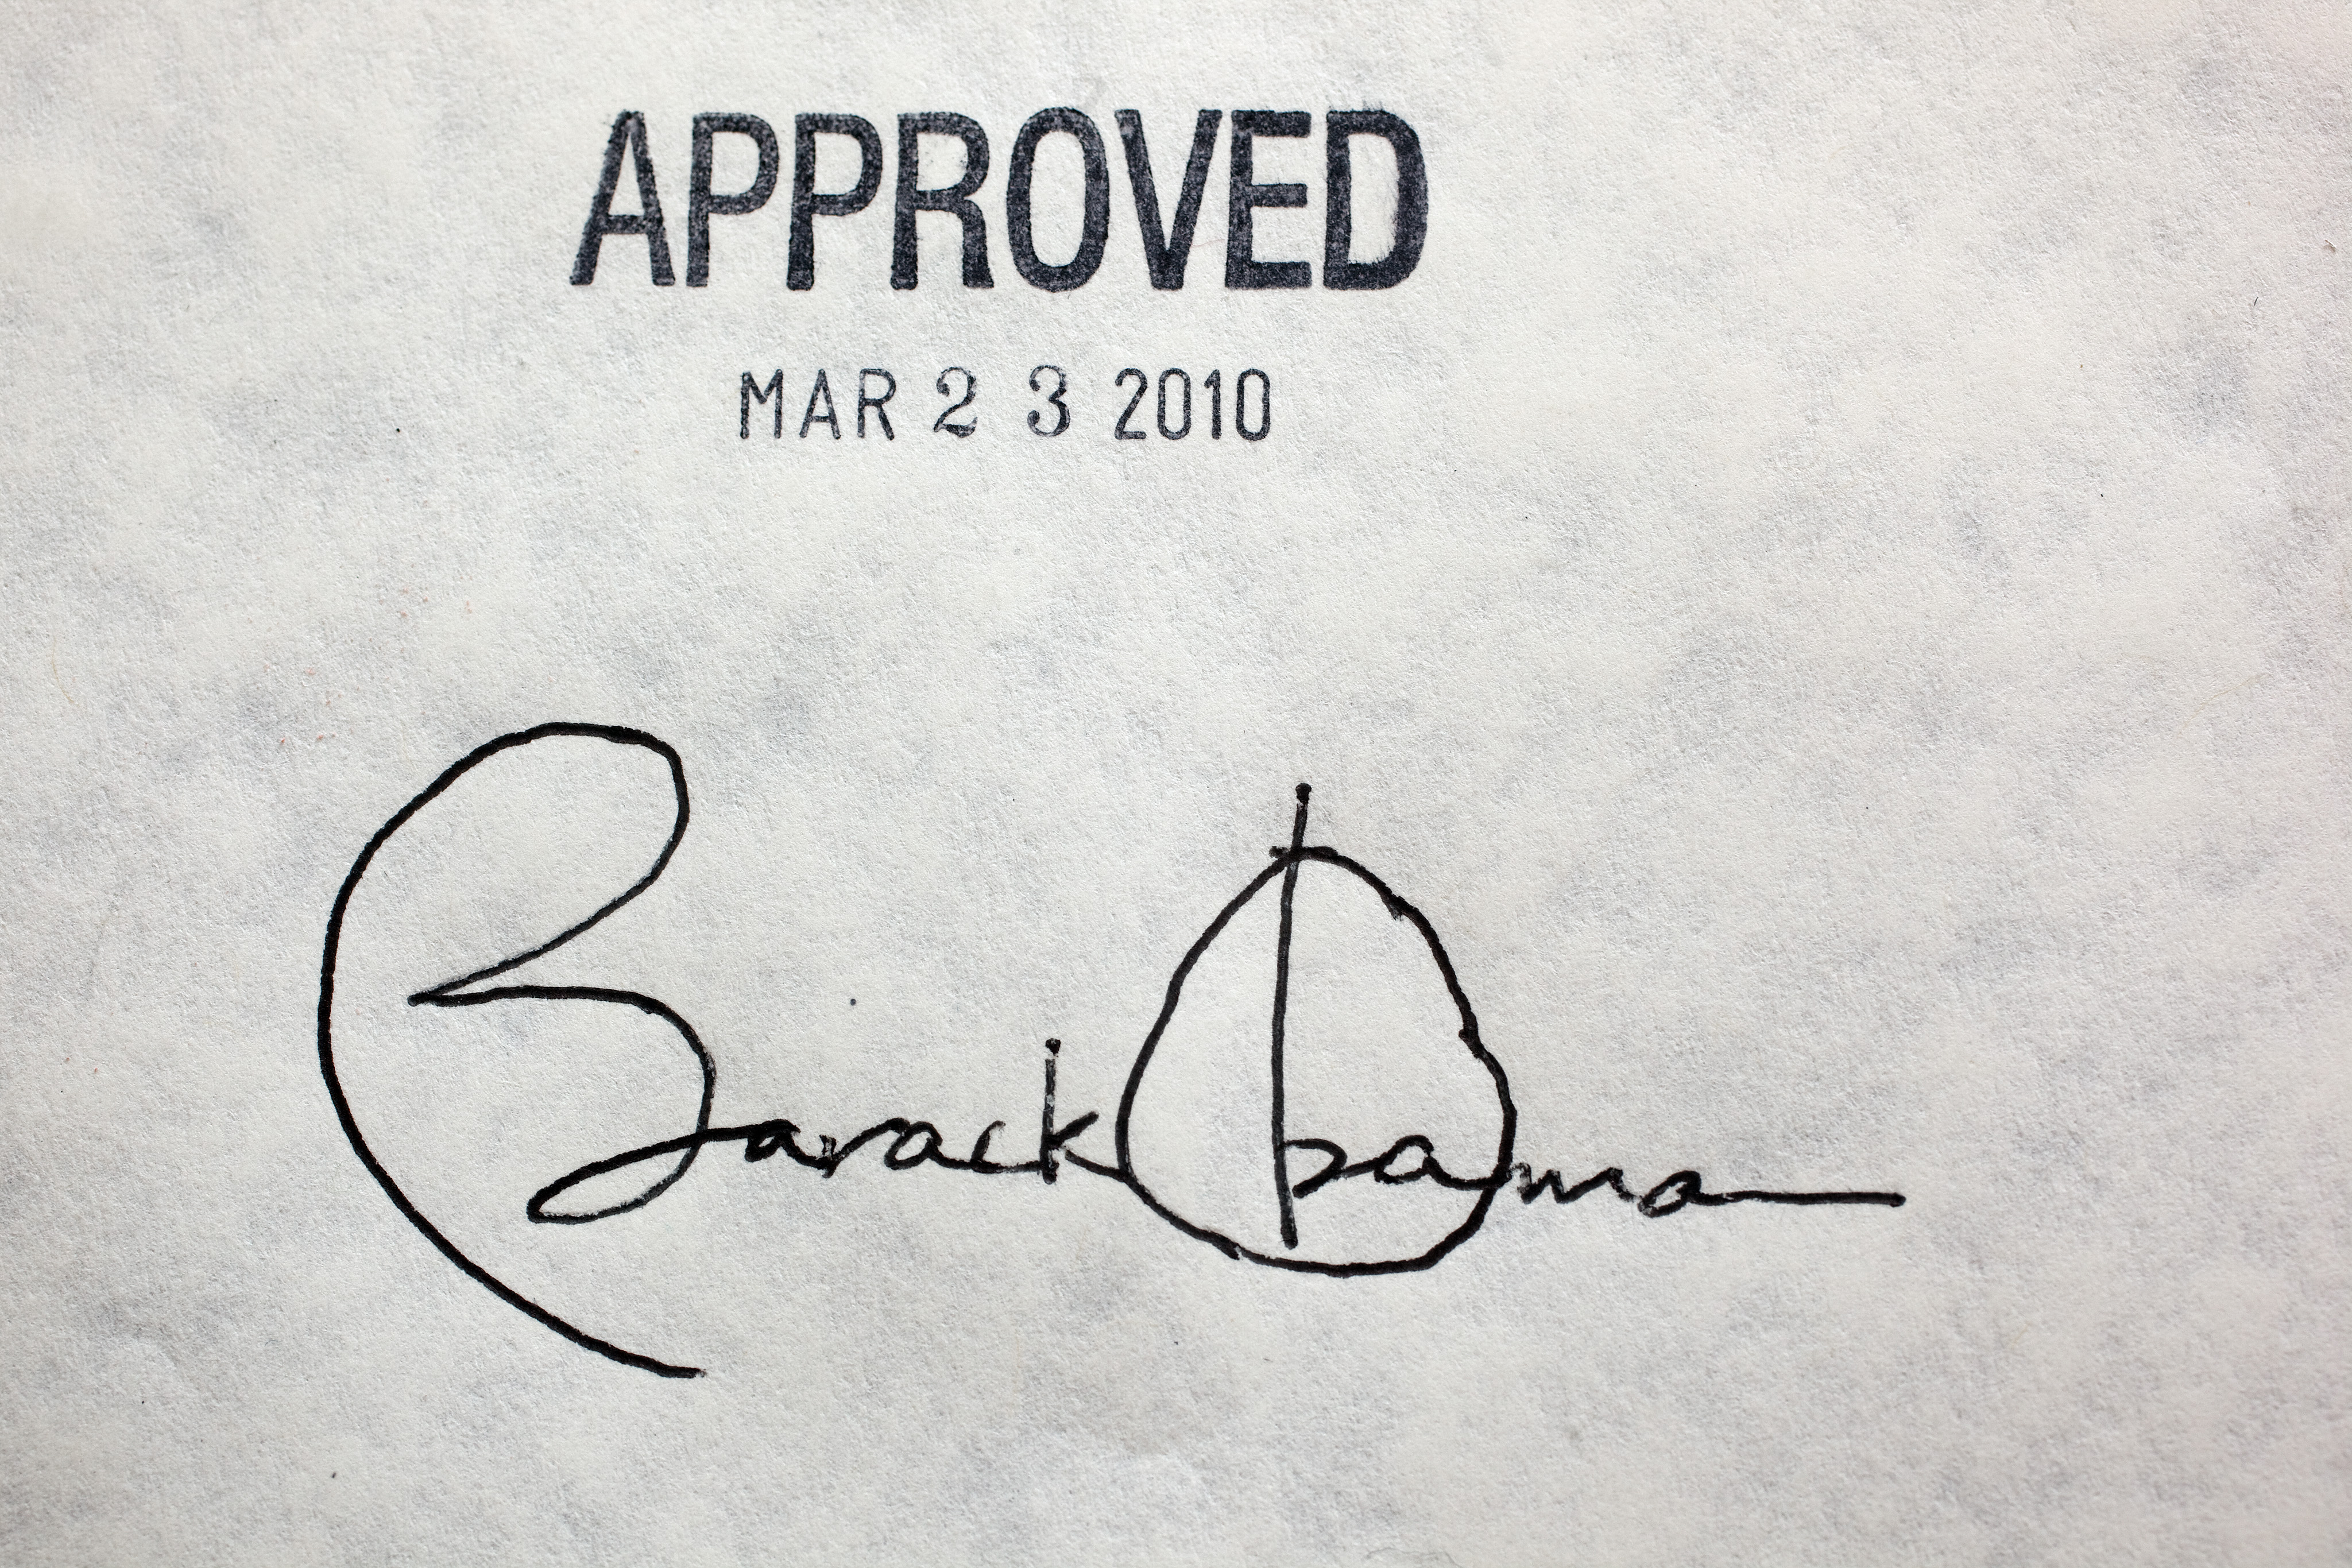 Obama healthcare signature.jpg